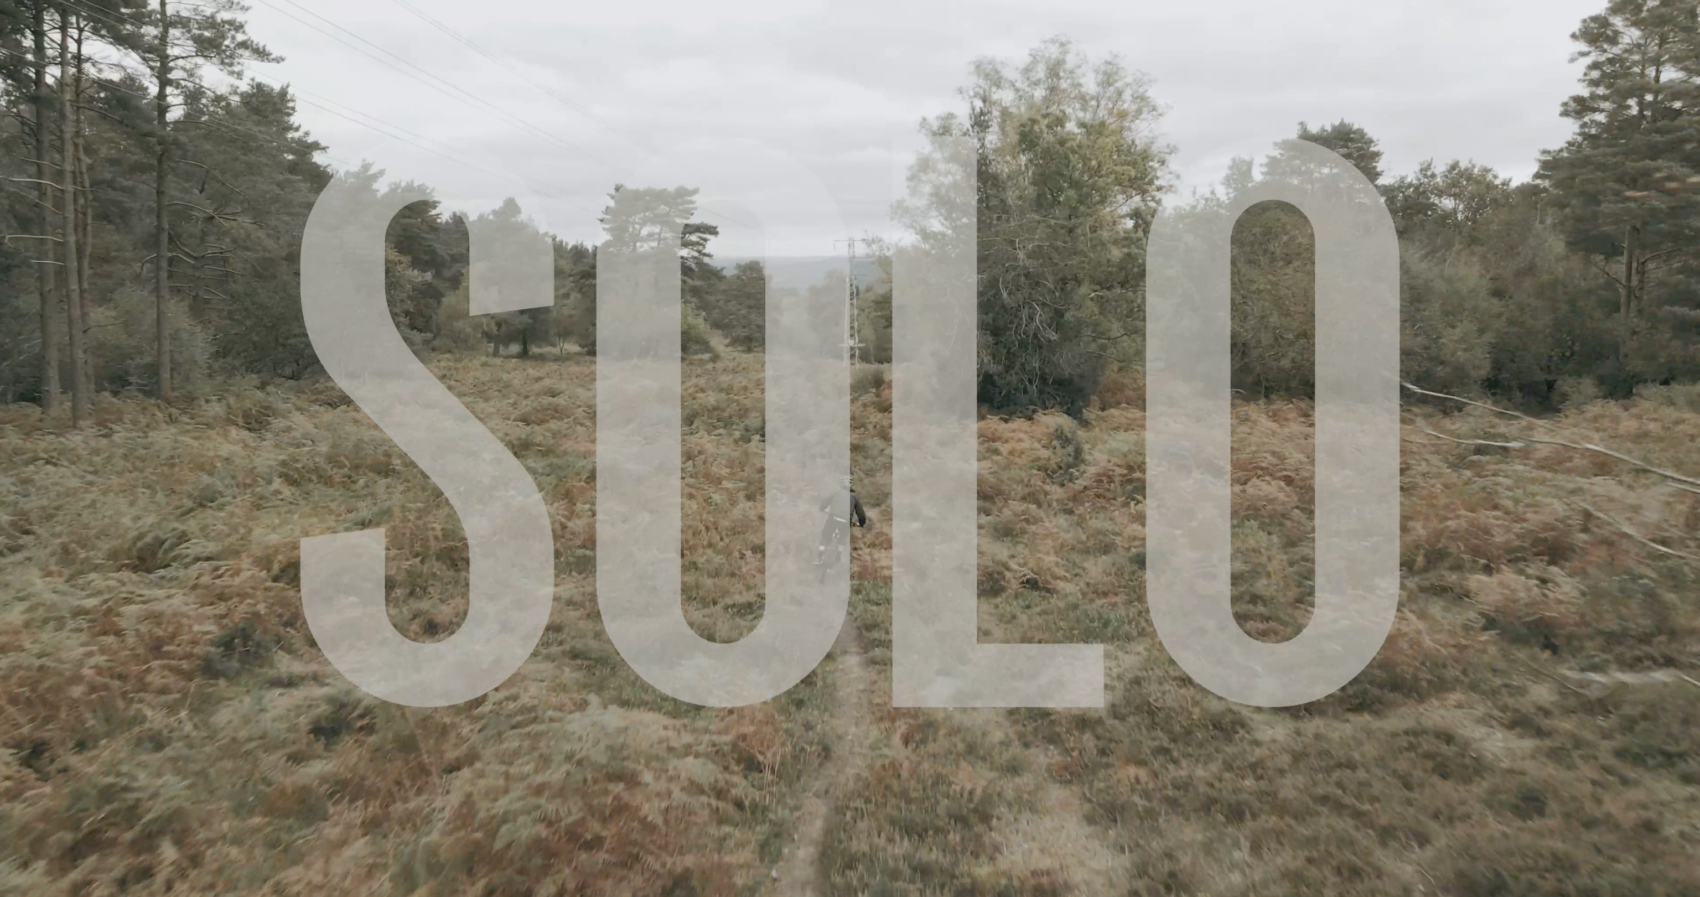 Solo – A Self Filmed MTB Film